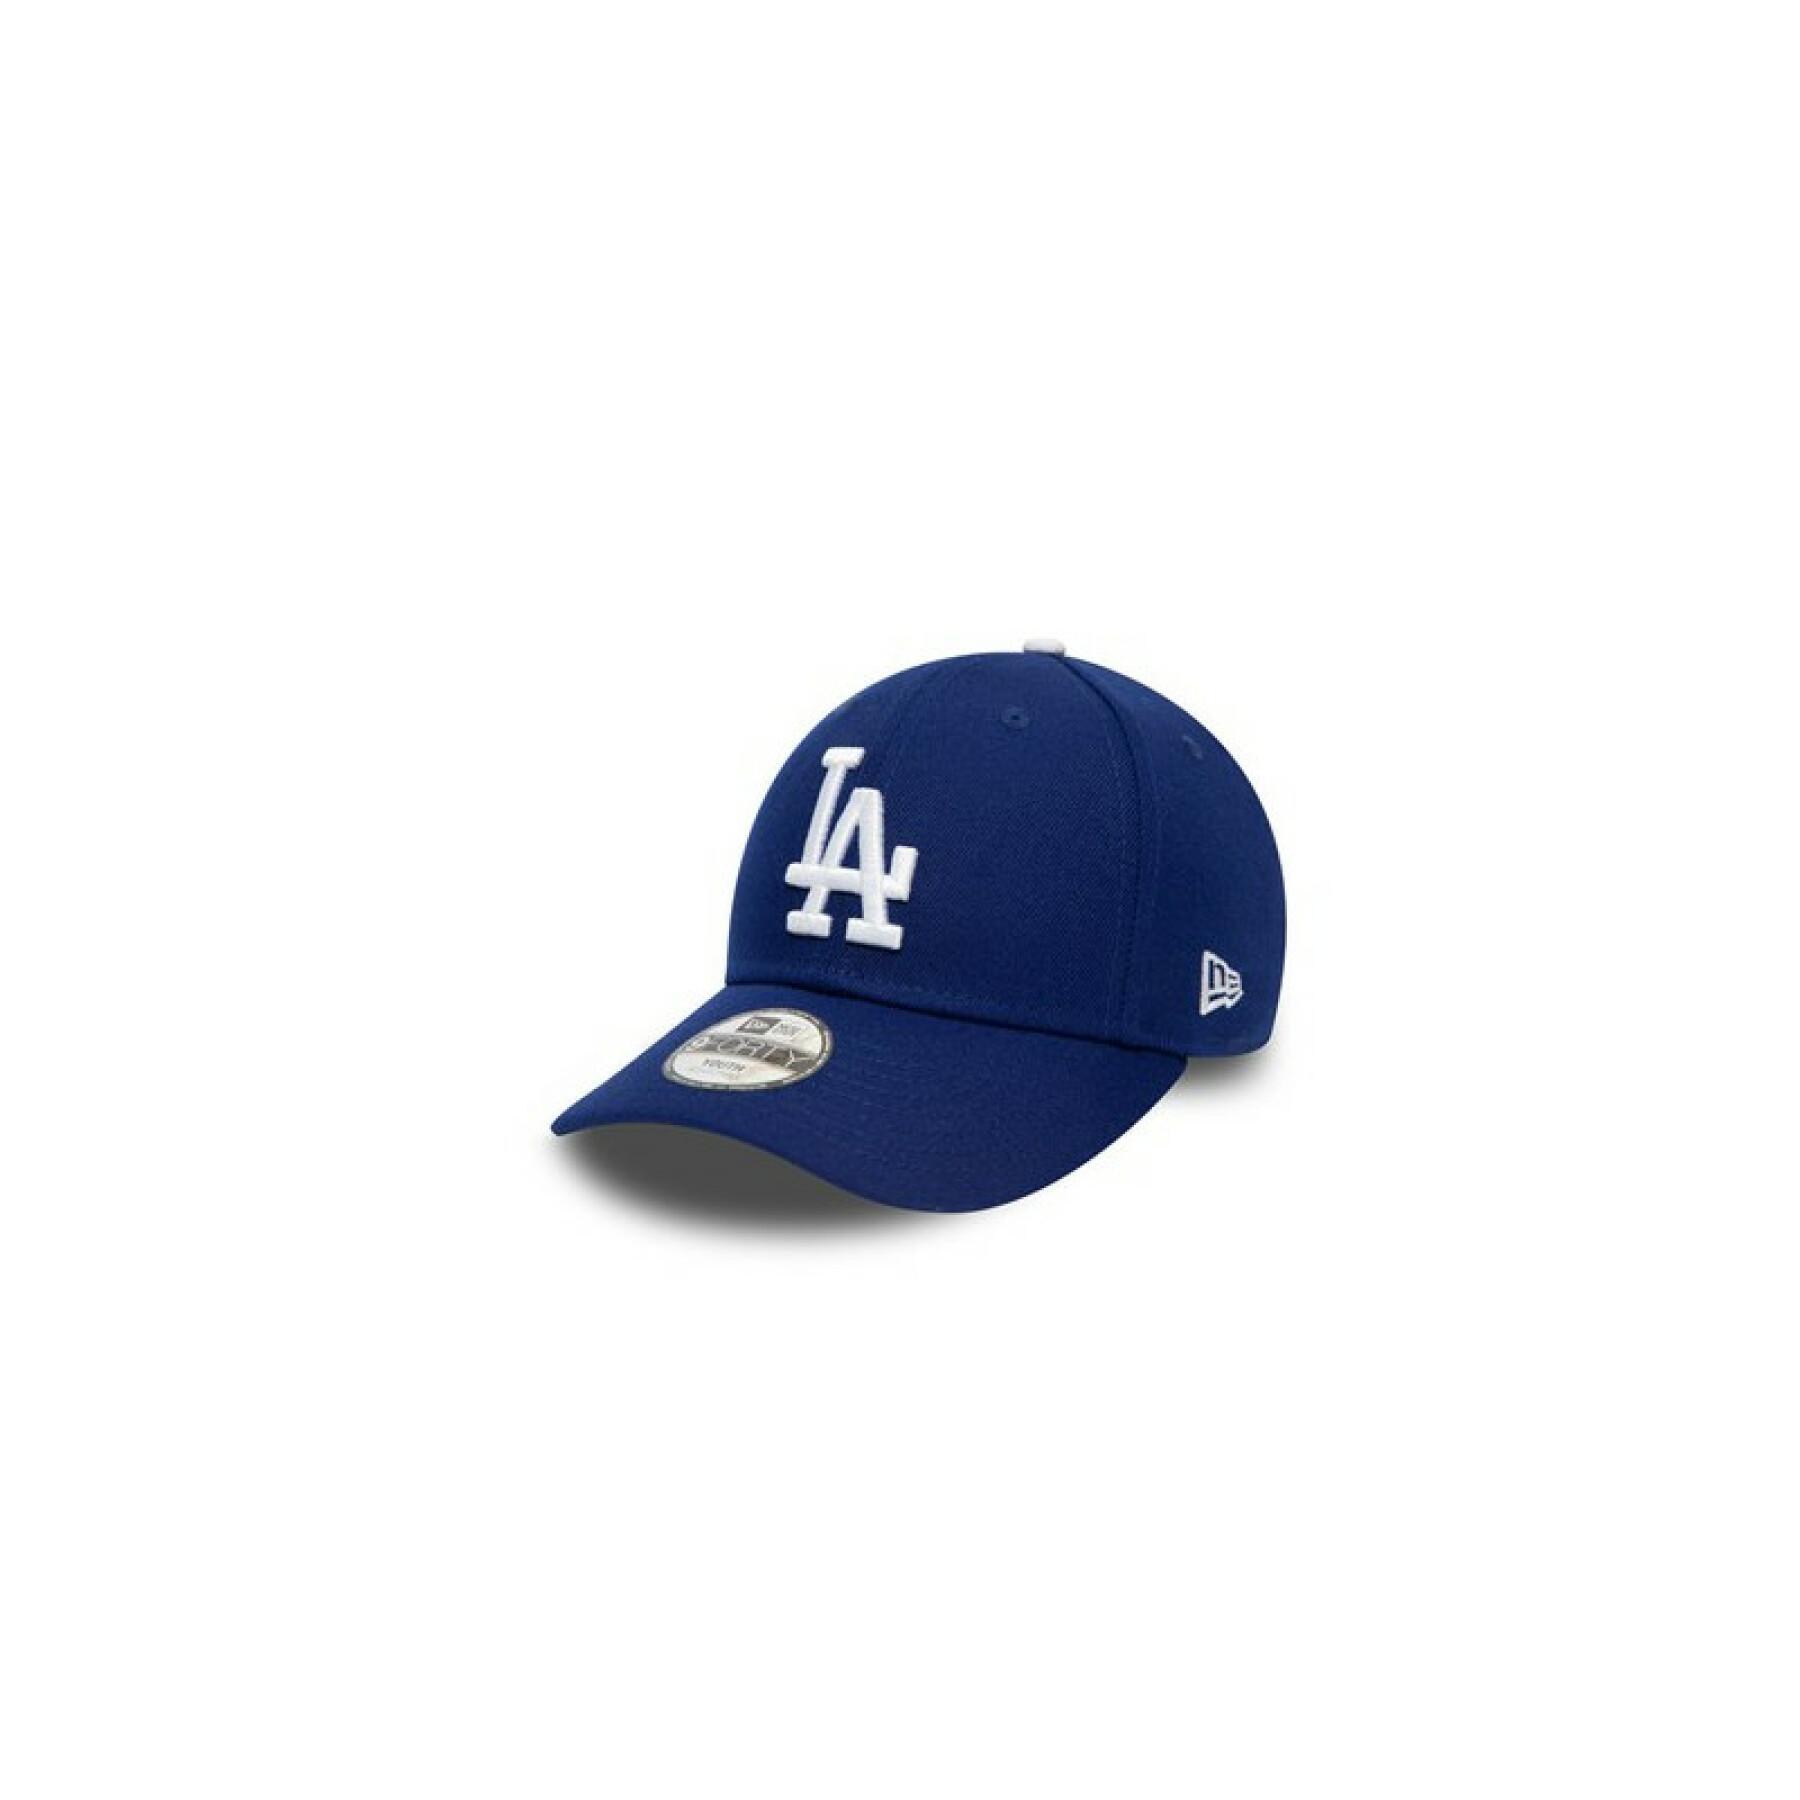 Kinderpet 9forty Los Angeles Dodgers